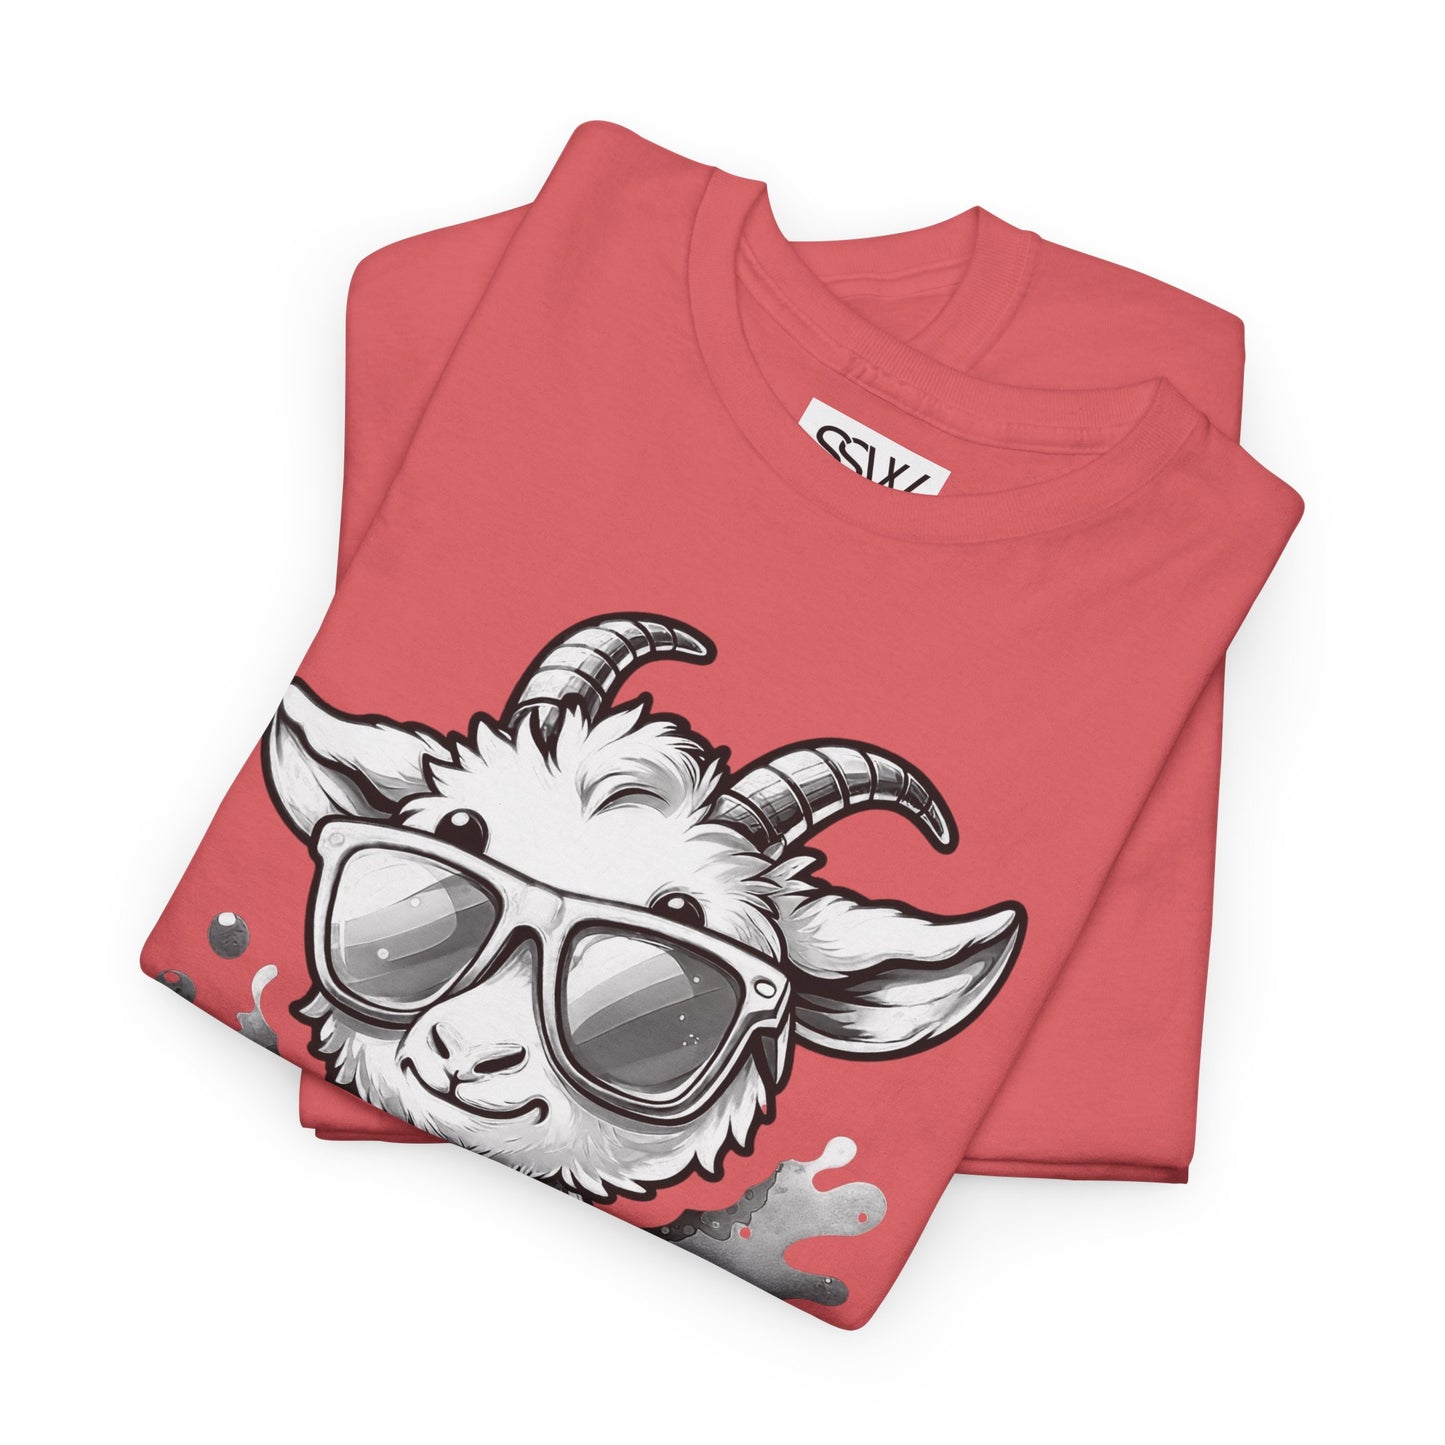 Beach Goat B&W Tee Shirt